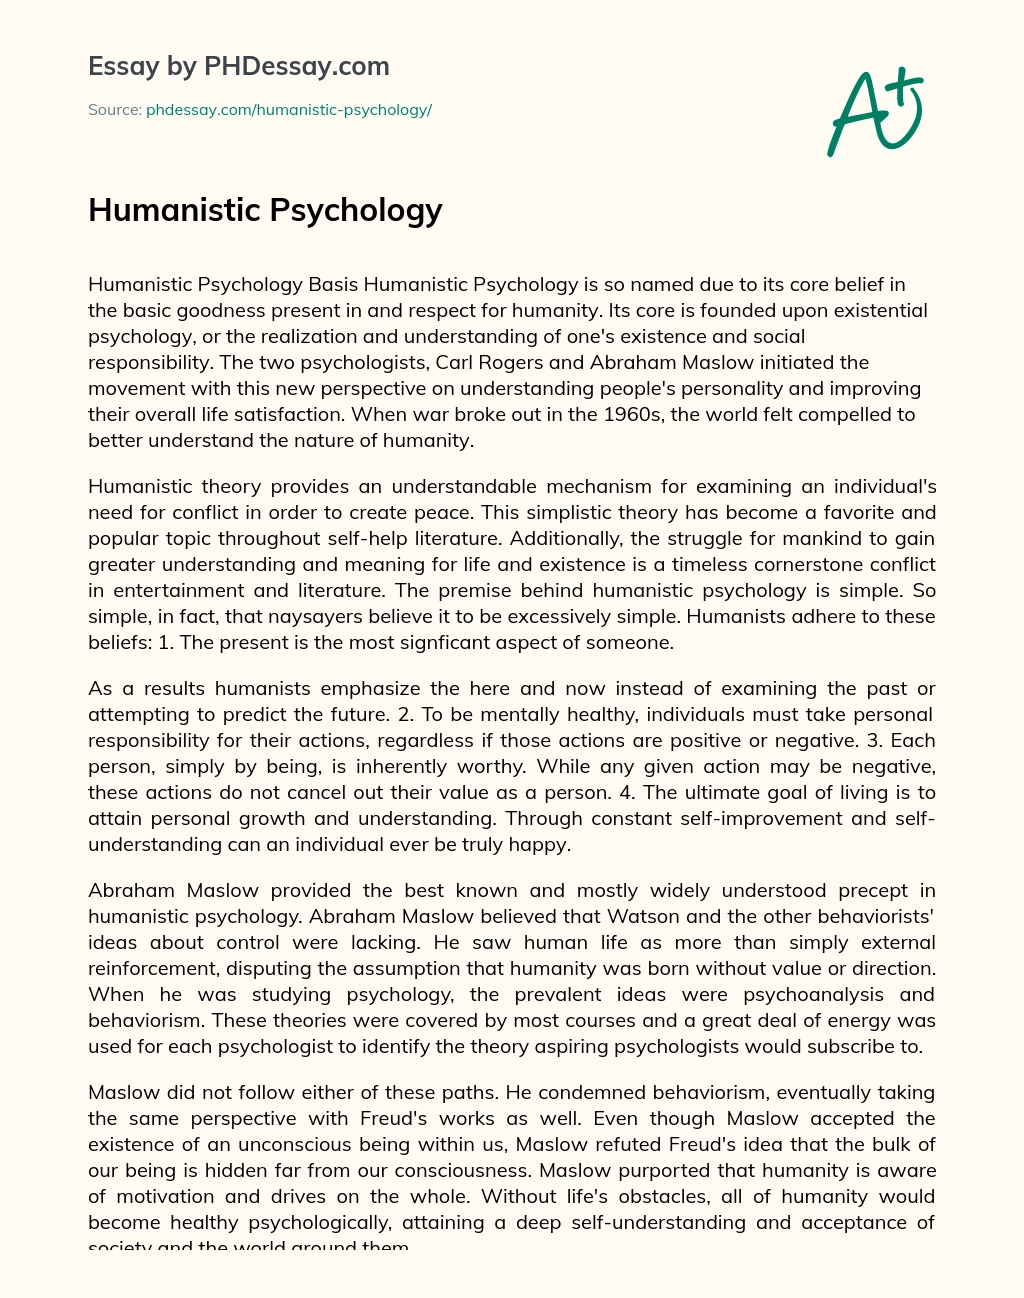 Humanistic Psychology essay